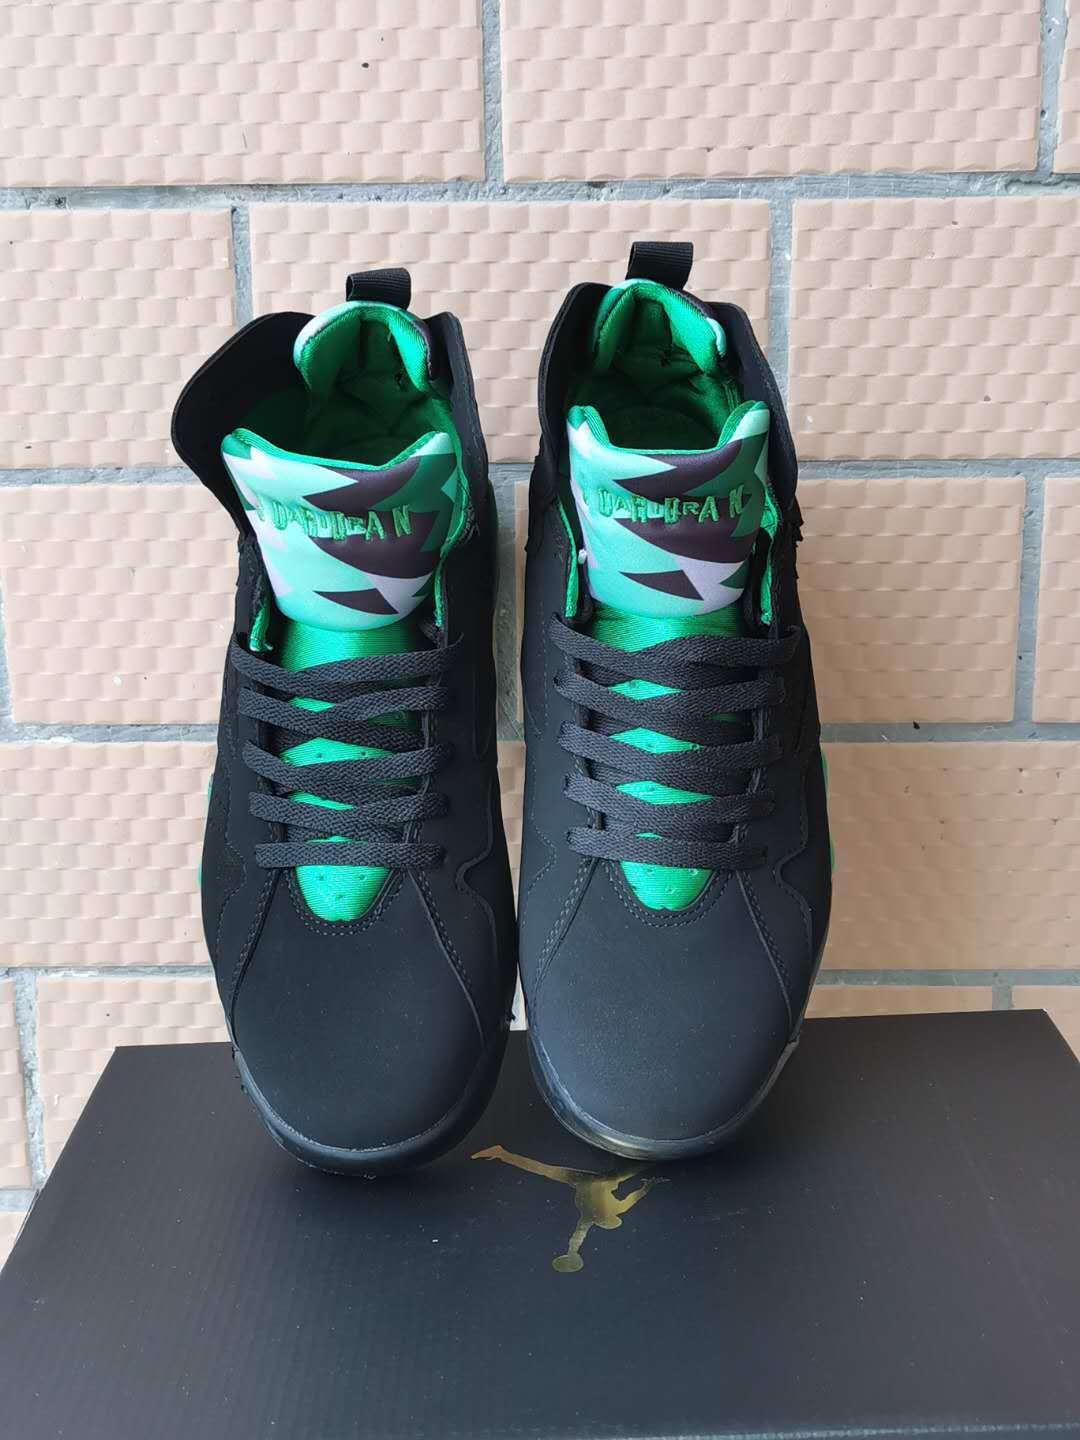 New Men Air Jordan 7 Shoes Black Green